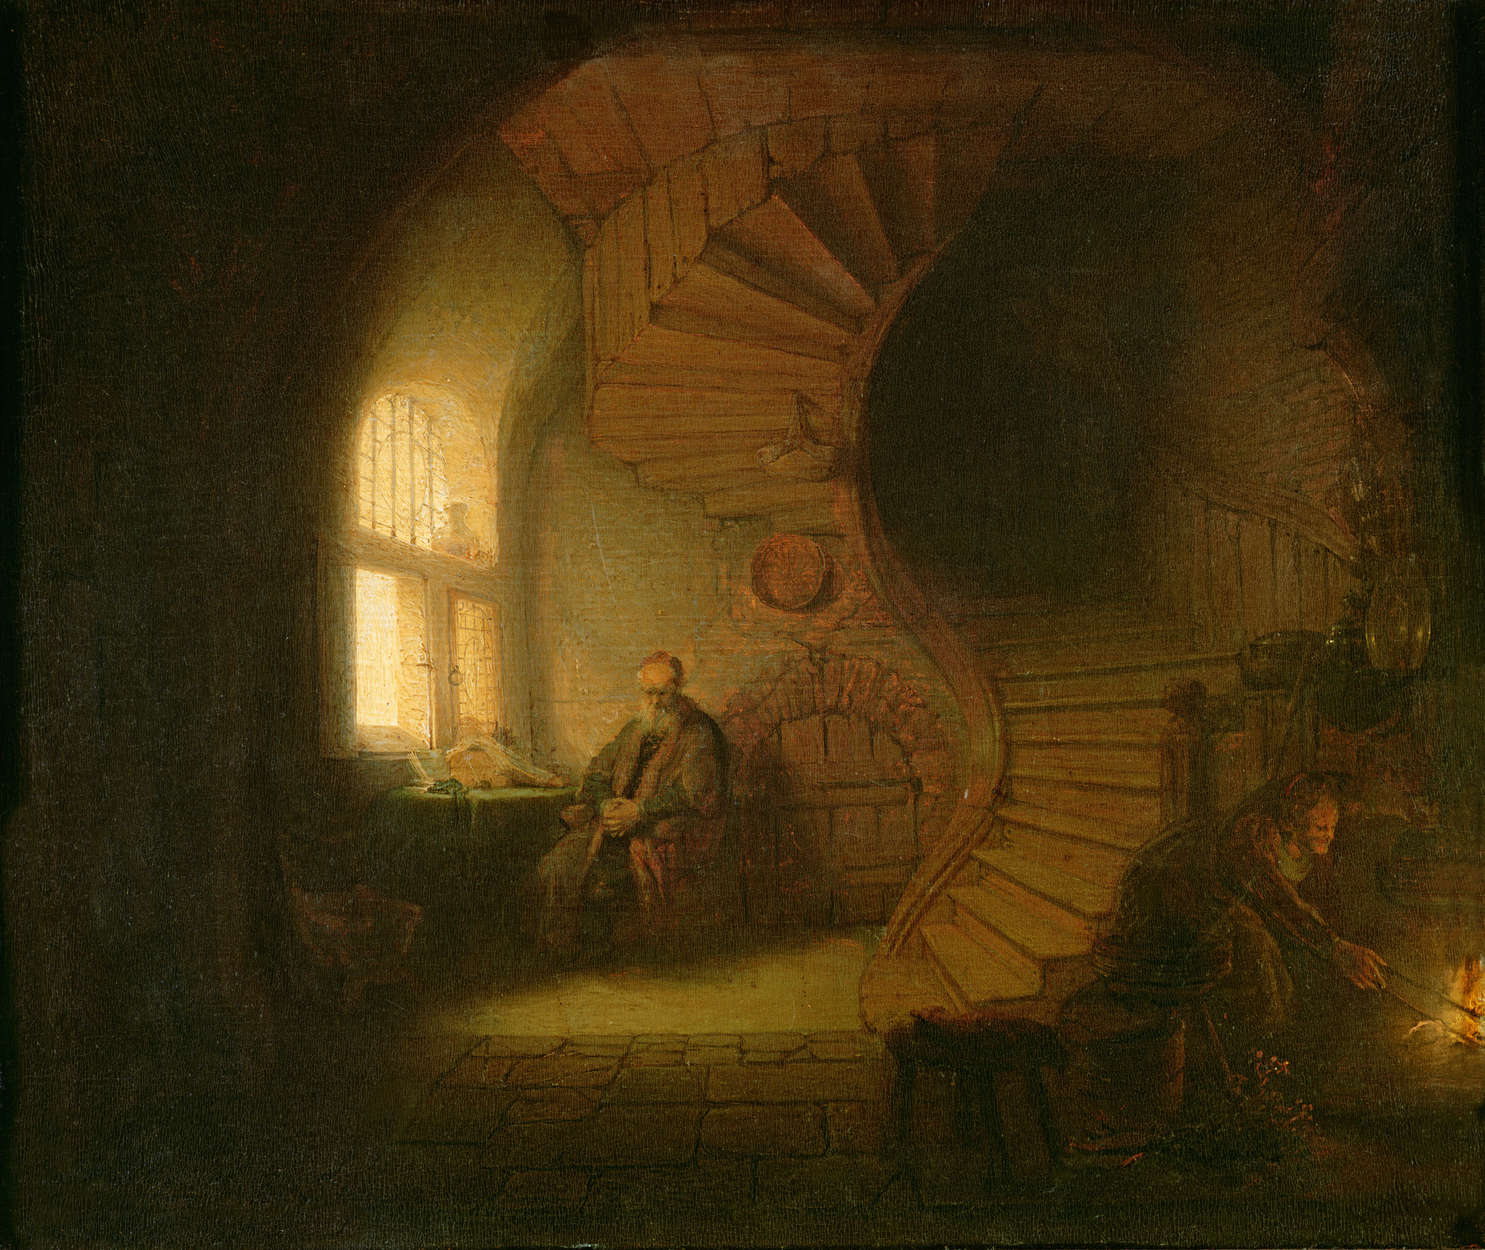             Filosofo in meditazione" murale di Rembrandt van Rijn
        